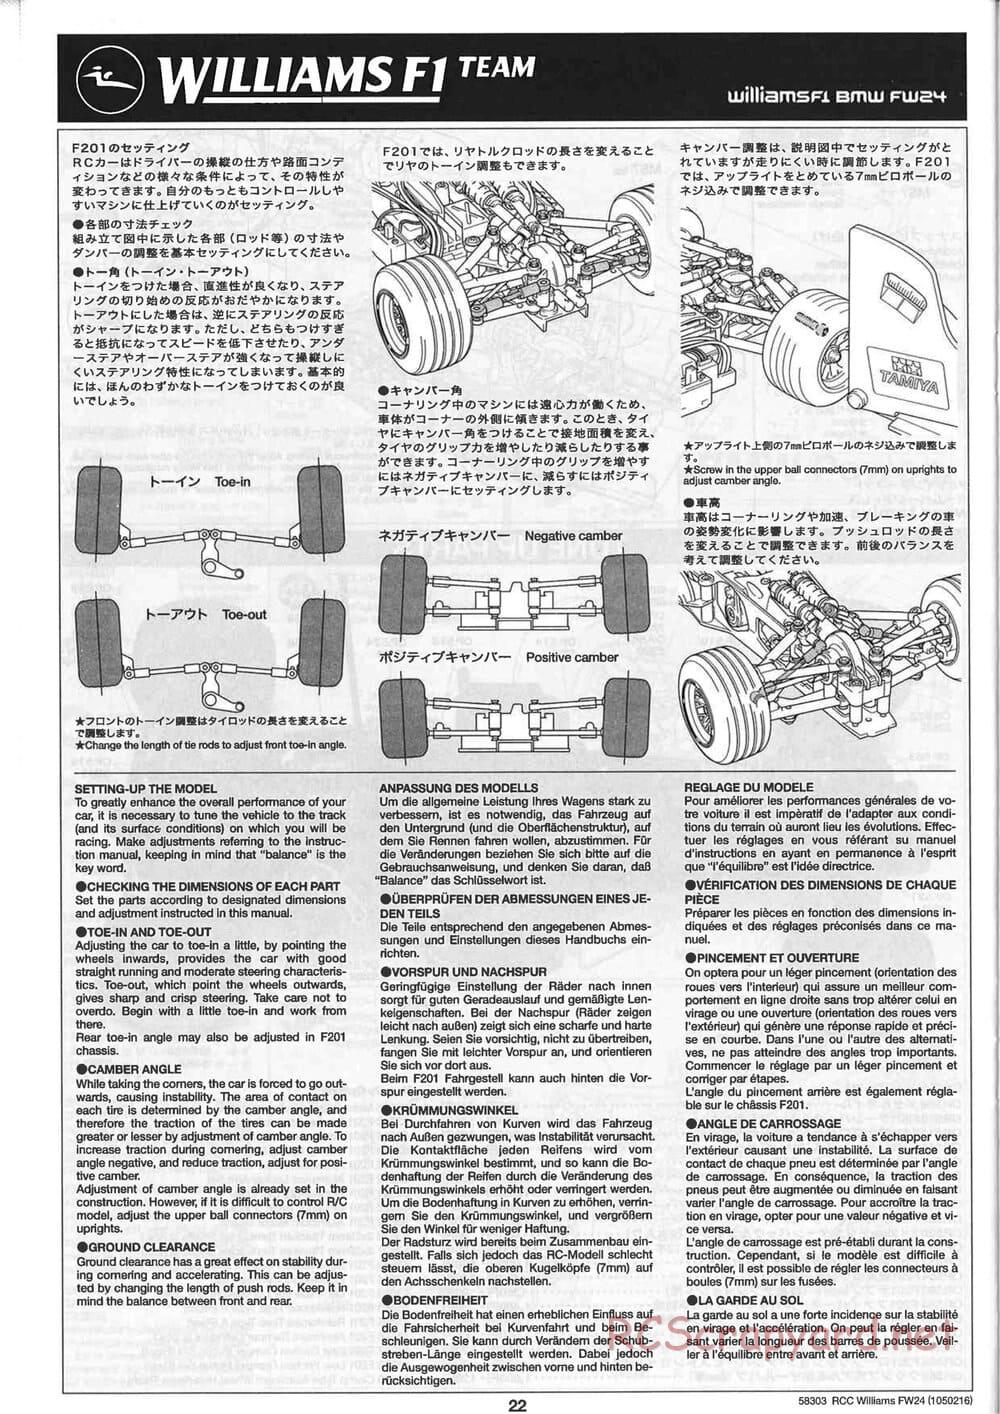 Tamiya - Williams F1 BMW FW24 - F201 Chassis - Manual - Page 22